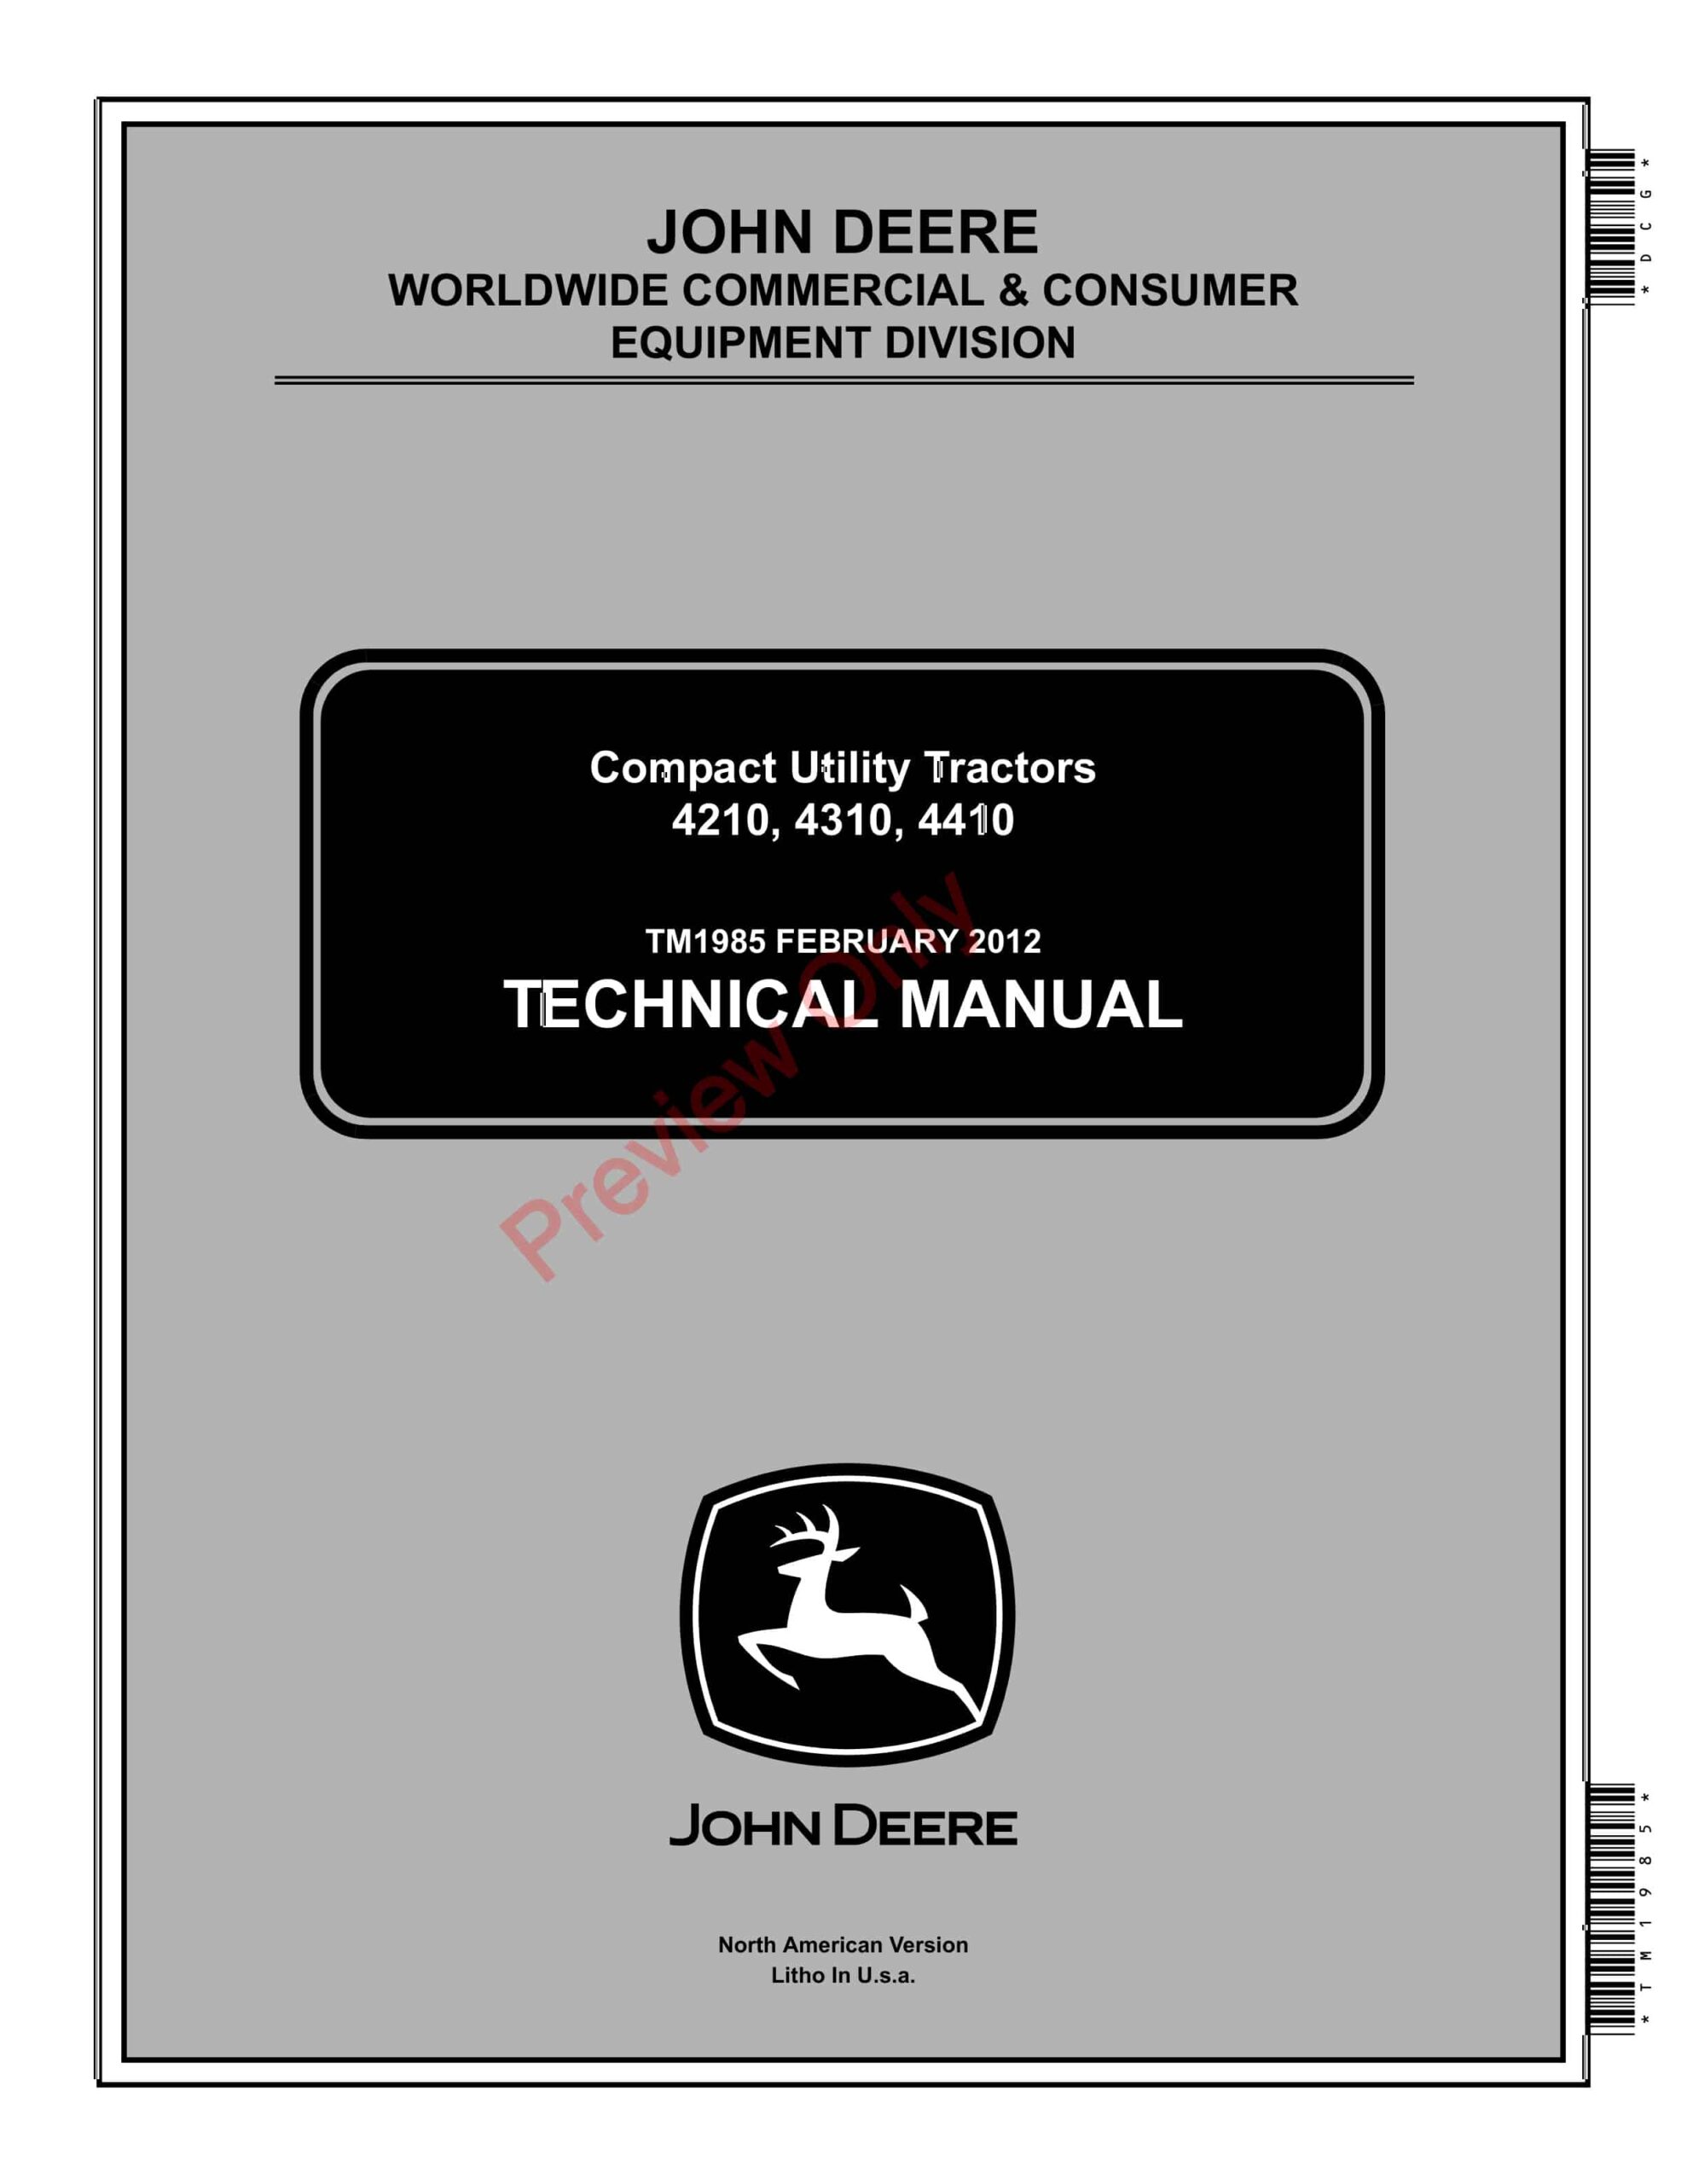 John Deere 4210, 4310, 4410 Compact Utility Tractors Technical Manual TM1985 01FEB12-1